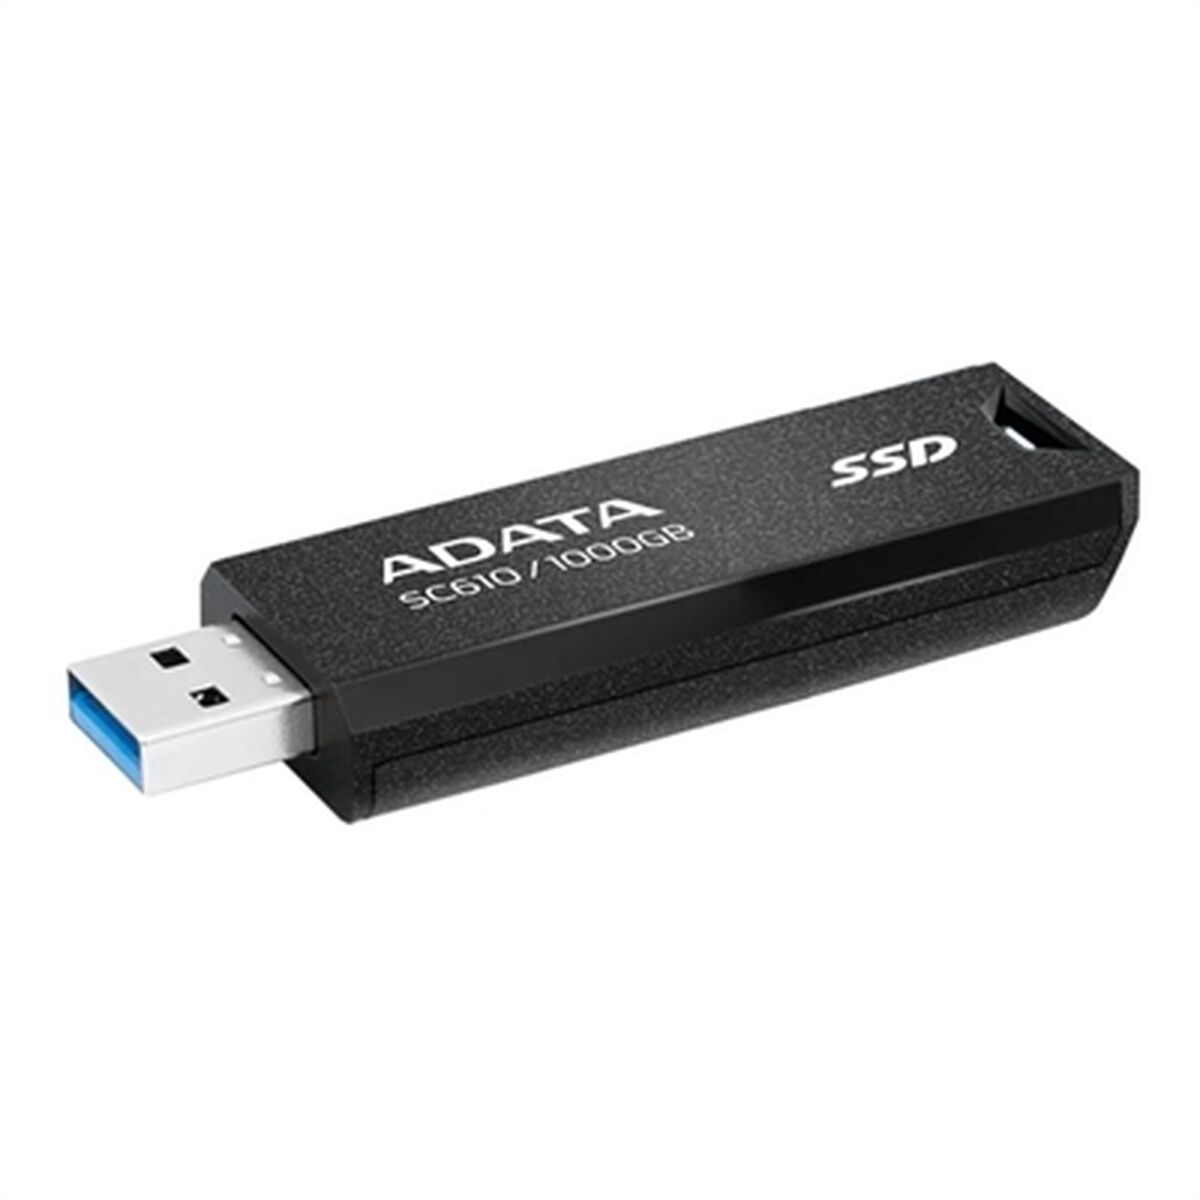 ADATA SC610-1000G-CBK, SSD, TB extern, Schwarz 1